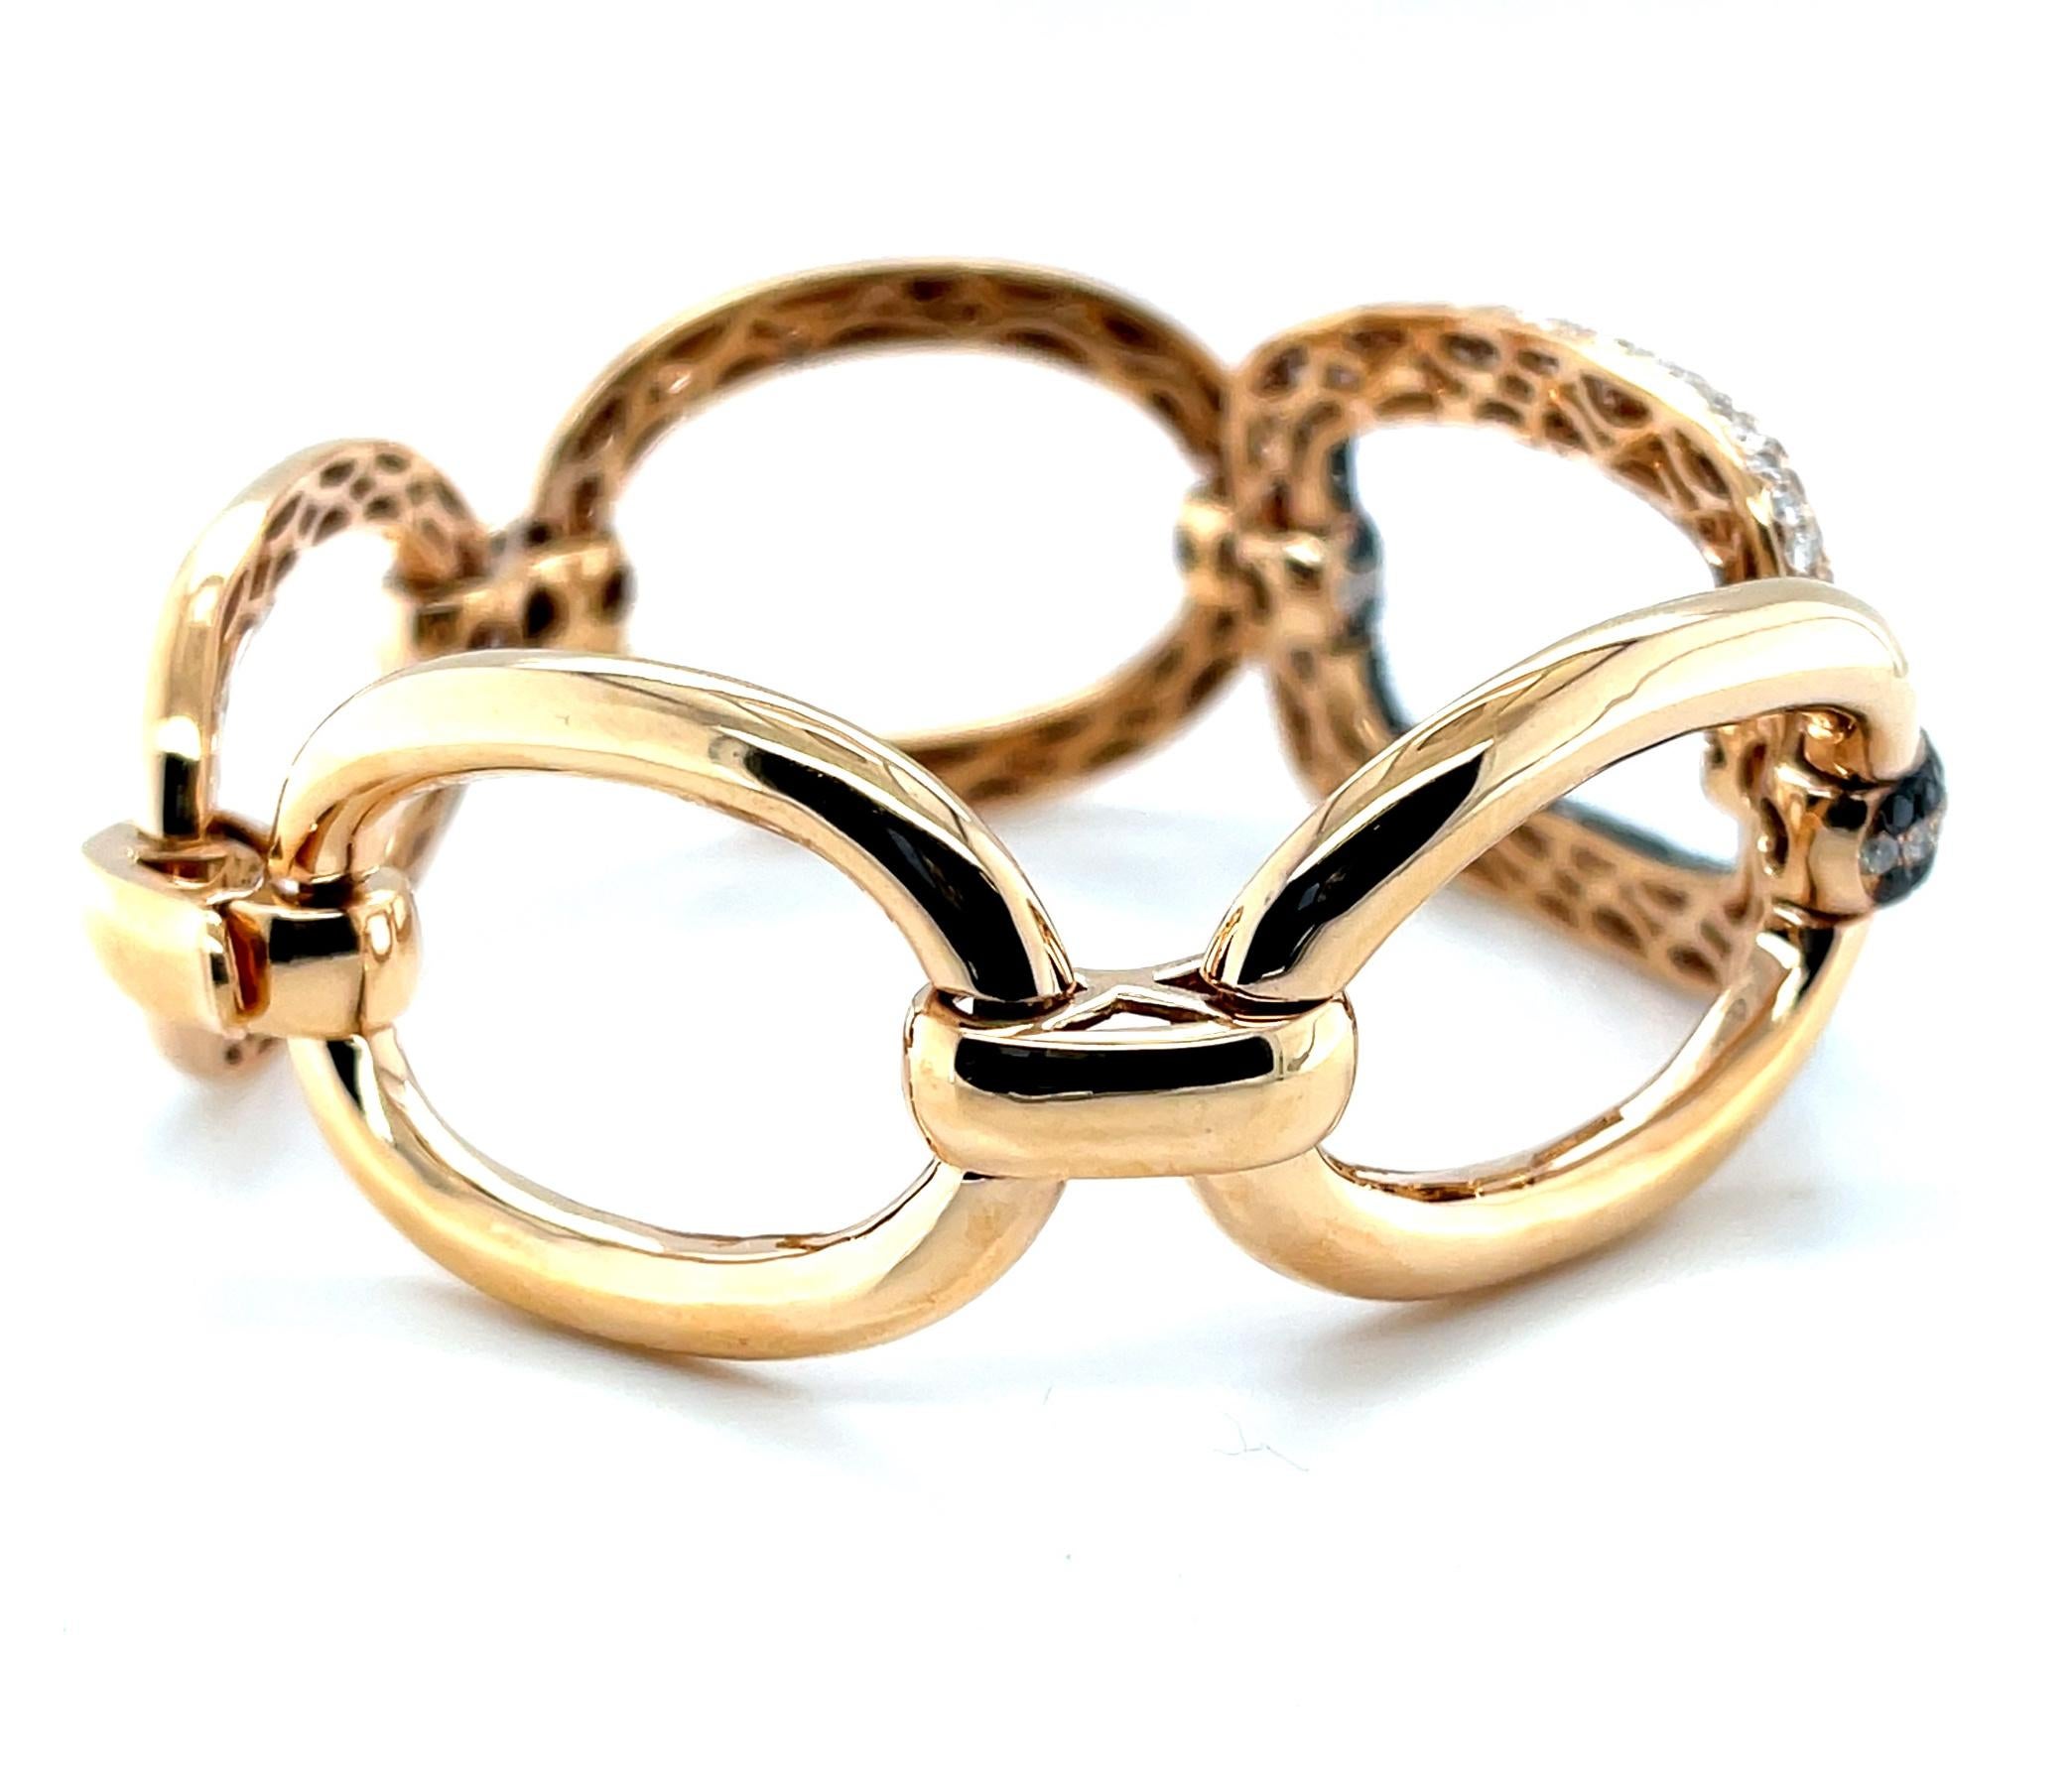 Black and White Diamond Link Bracelet in Rose Gold, 3.52 Carat Total For Sale 1